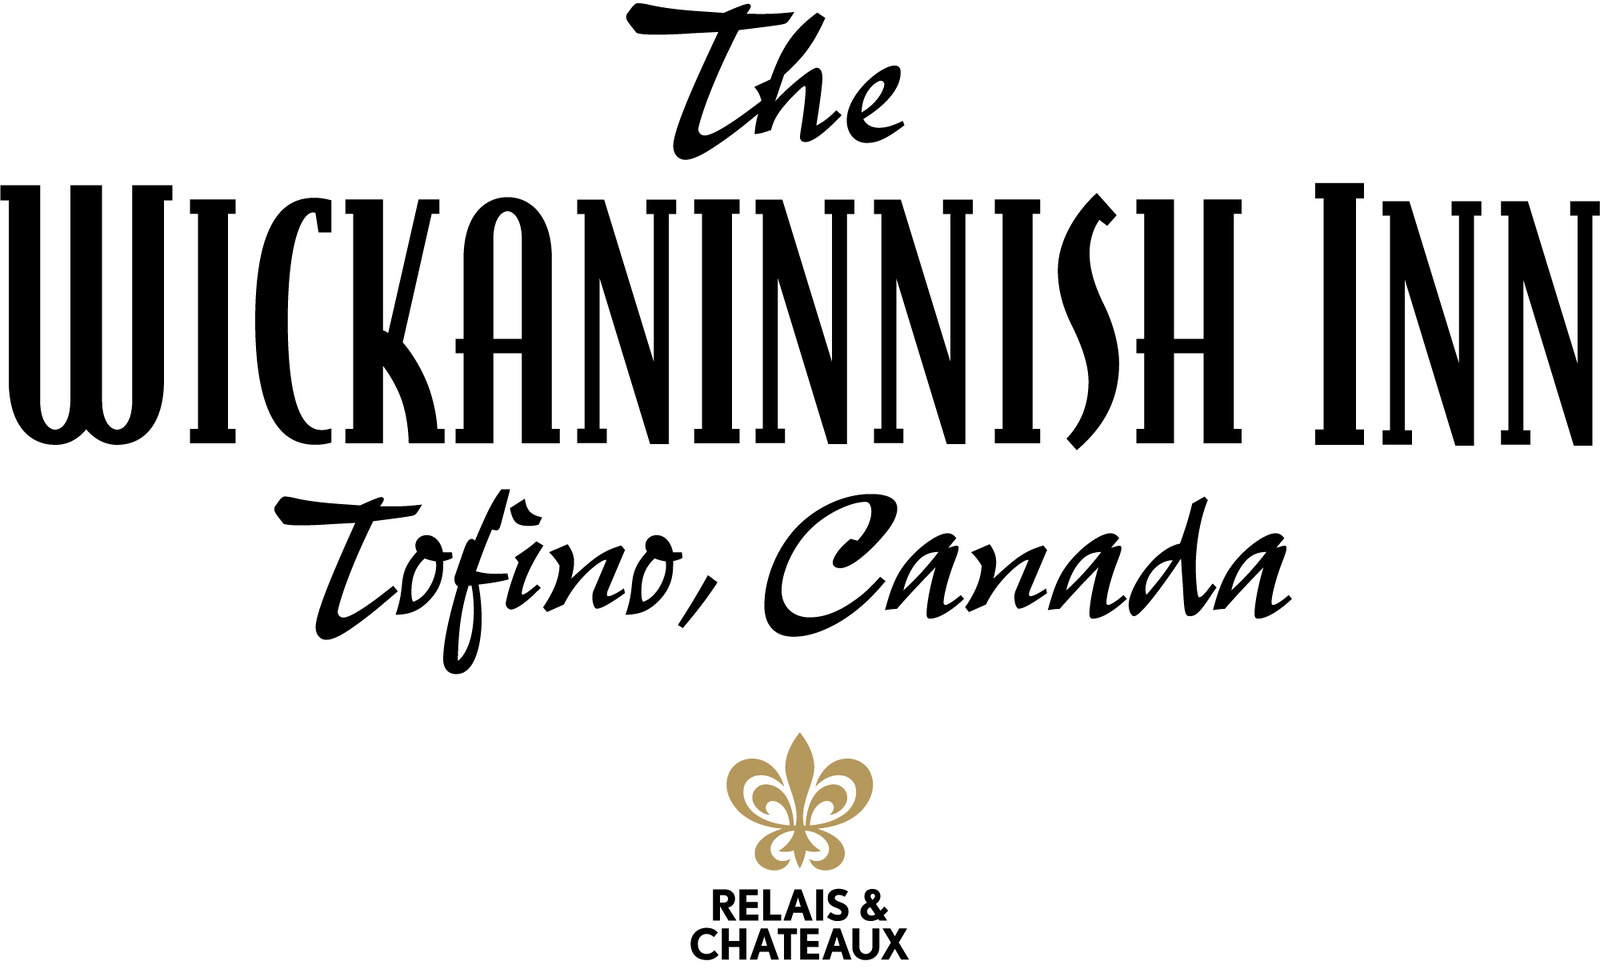 The Wickaninnish Inn logo